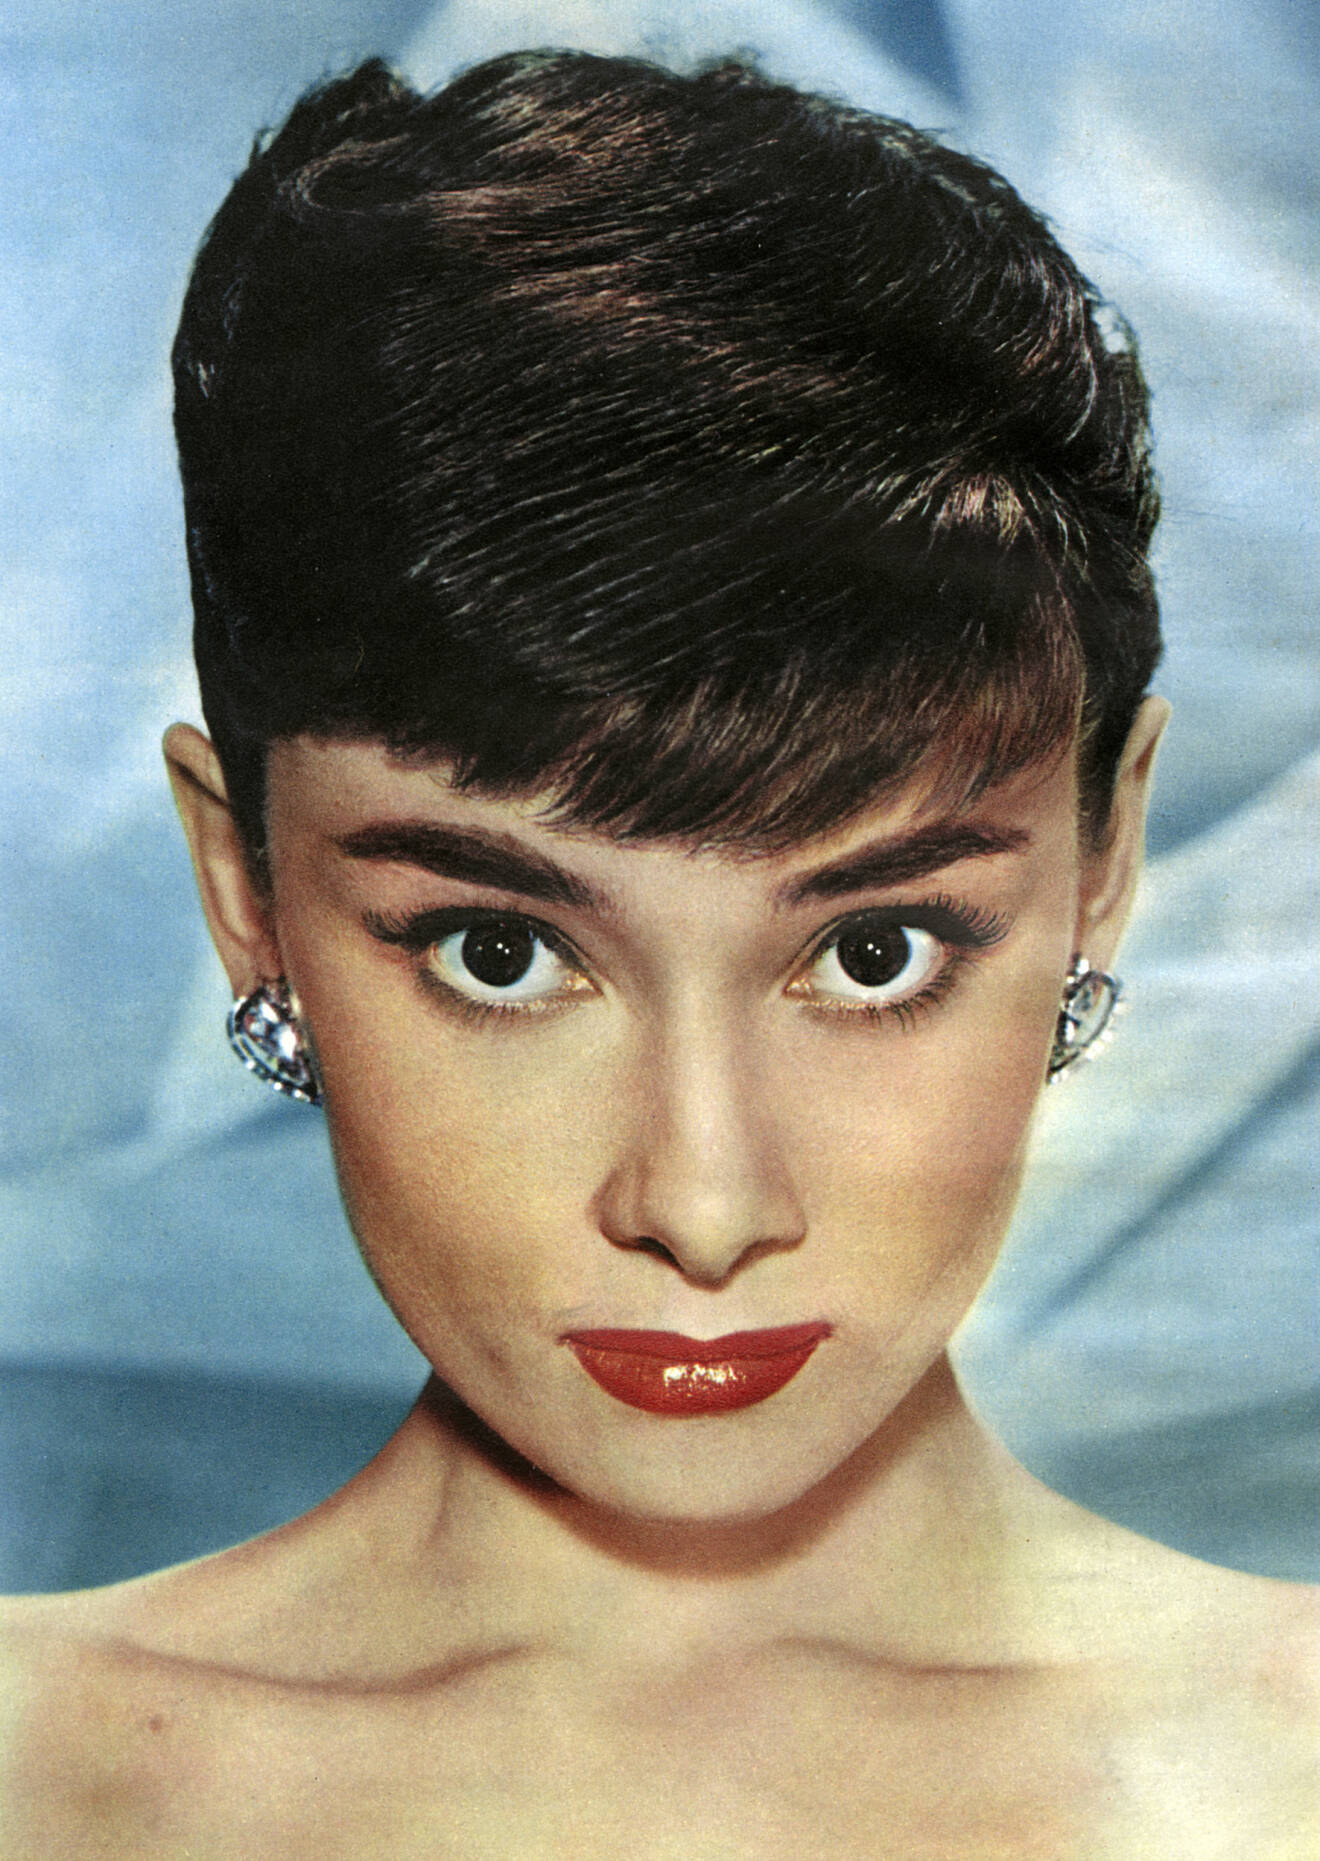 Audrey Hepburn i pixie hair cut.